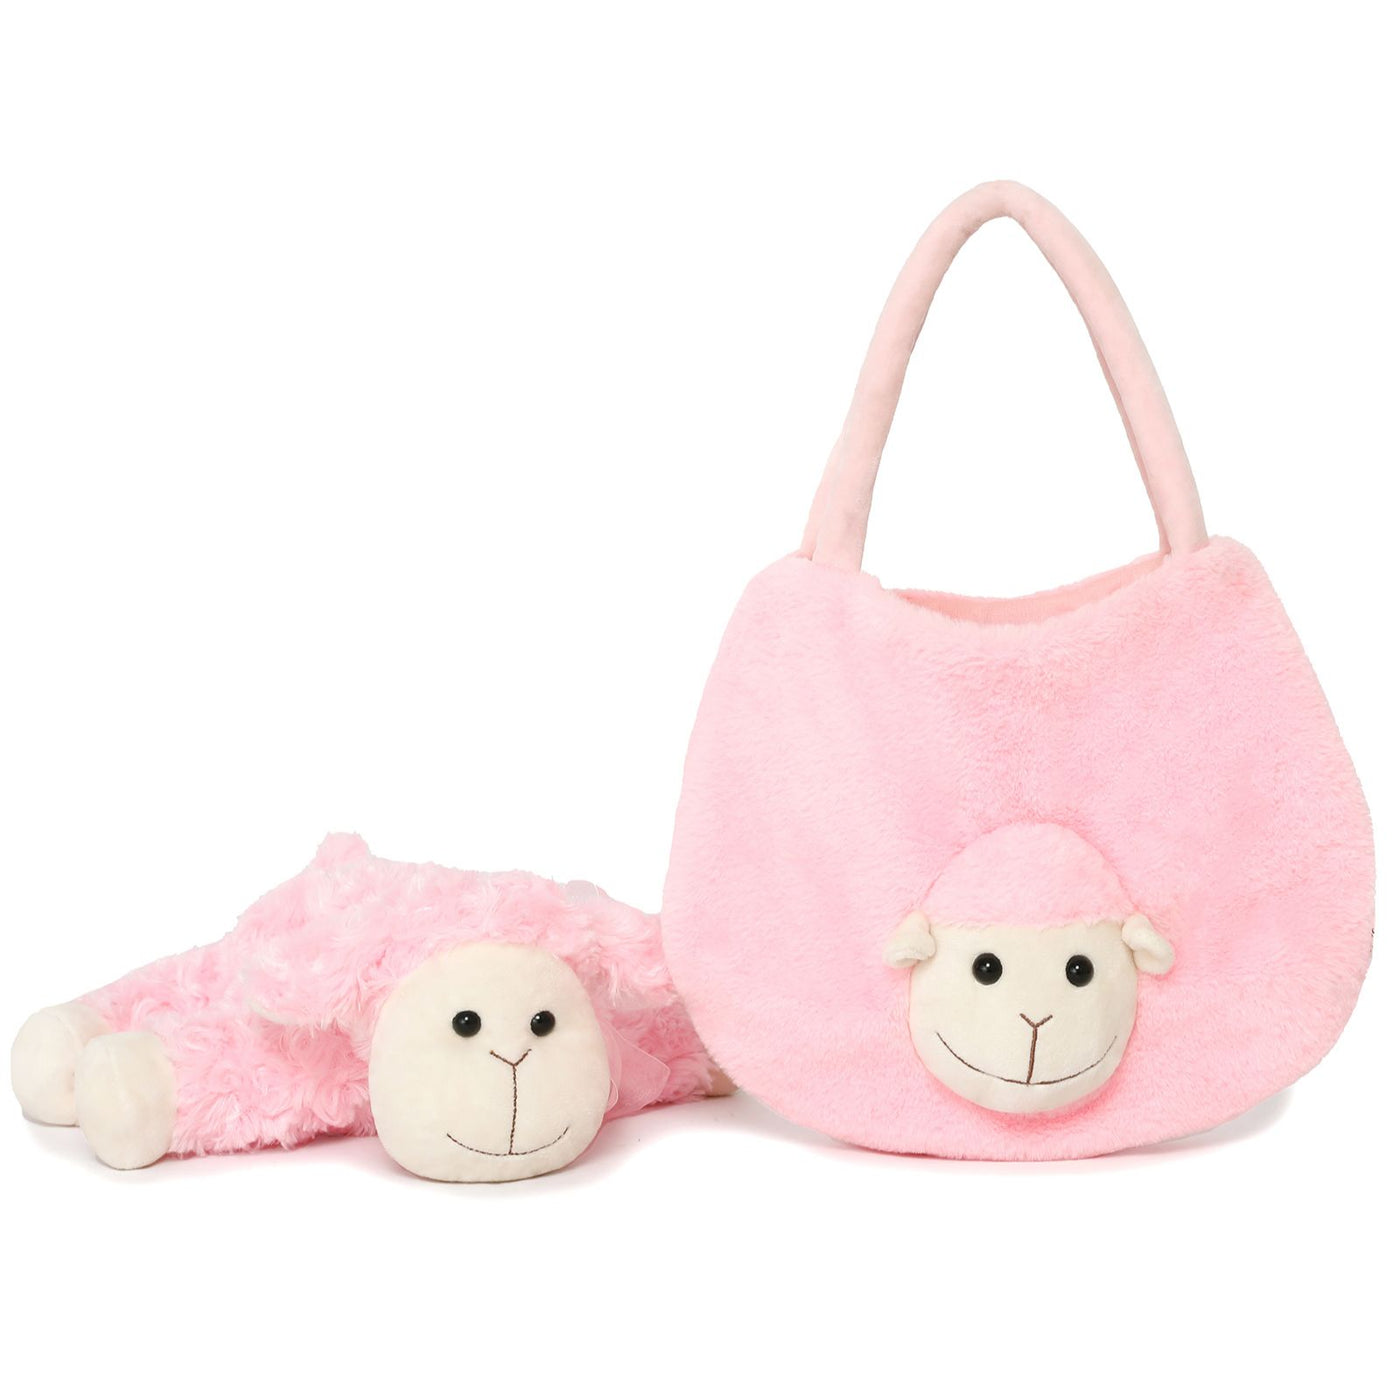 Alpaca Handbag with an Alpaca Plush Toy, Pink, 11.8 Inches - MorisMos Stuffed Animals